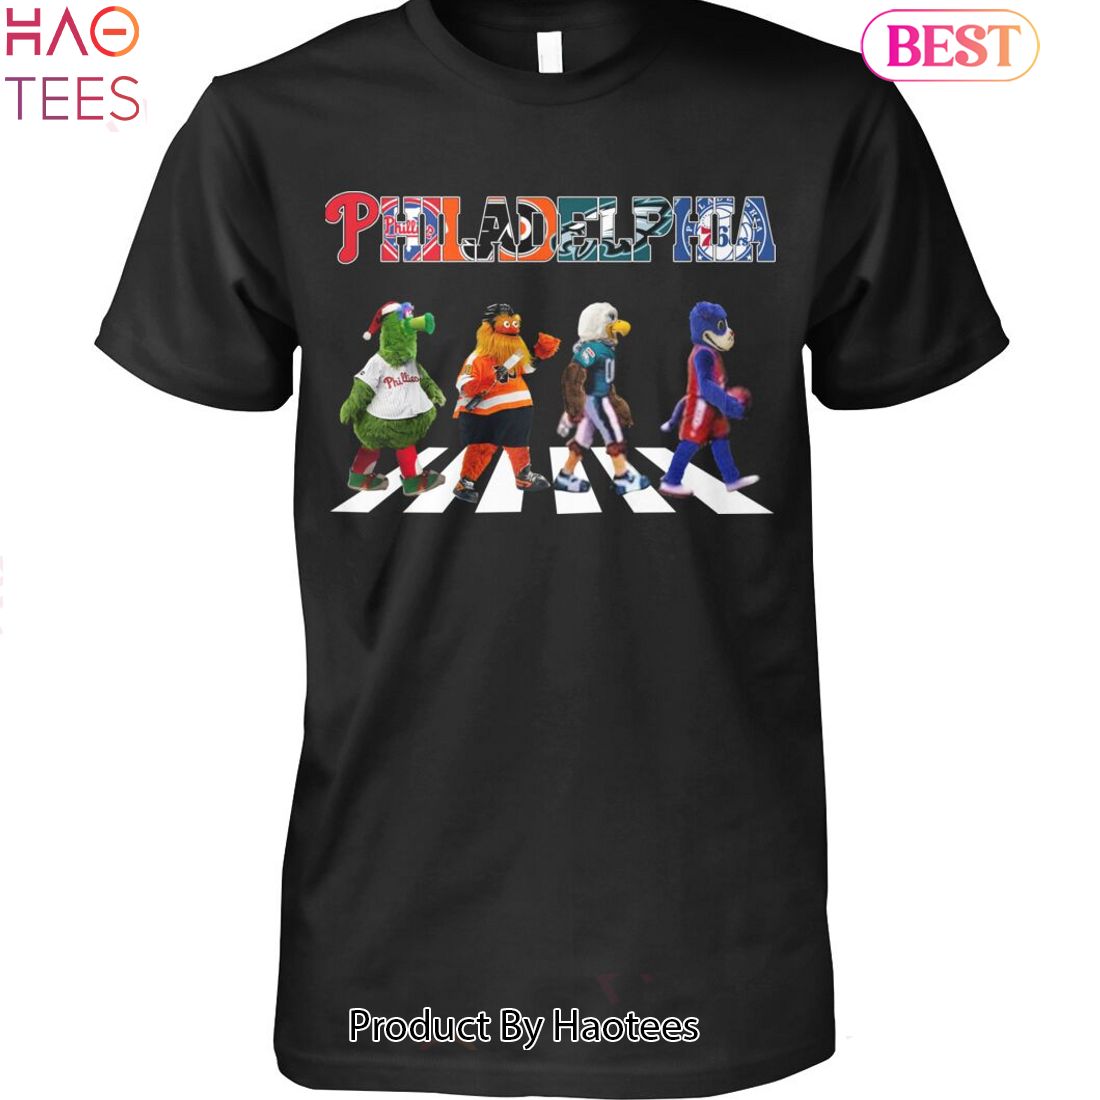 New York Yankees Mascot Design 3D Hoodie - T-shirts Low Price